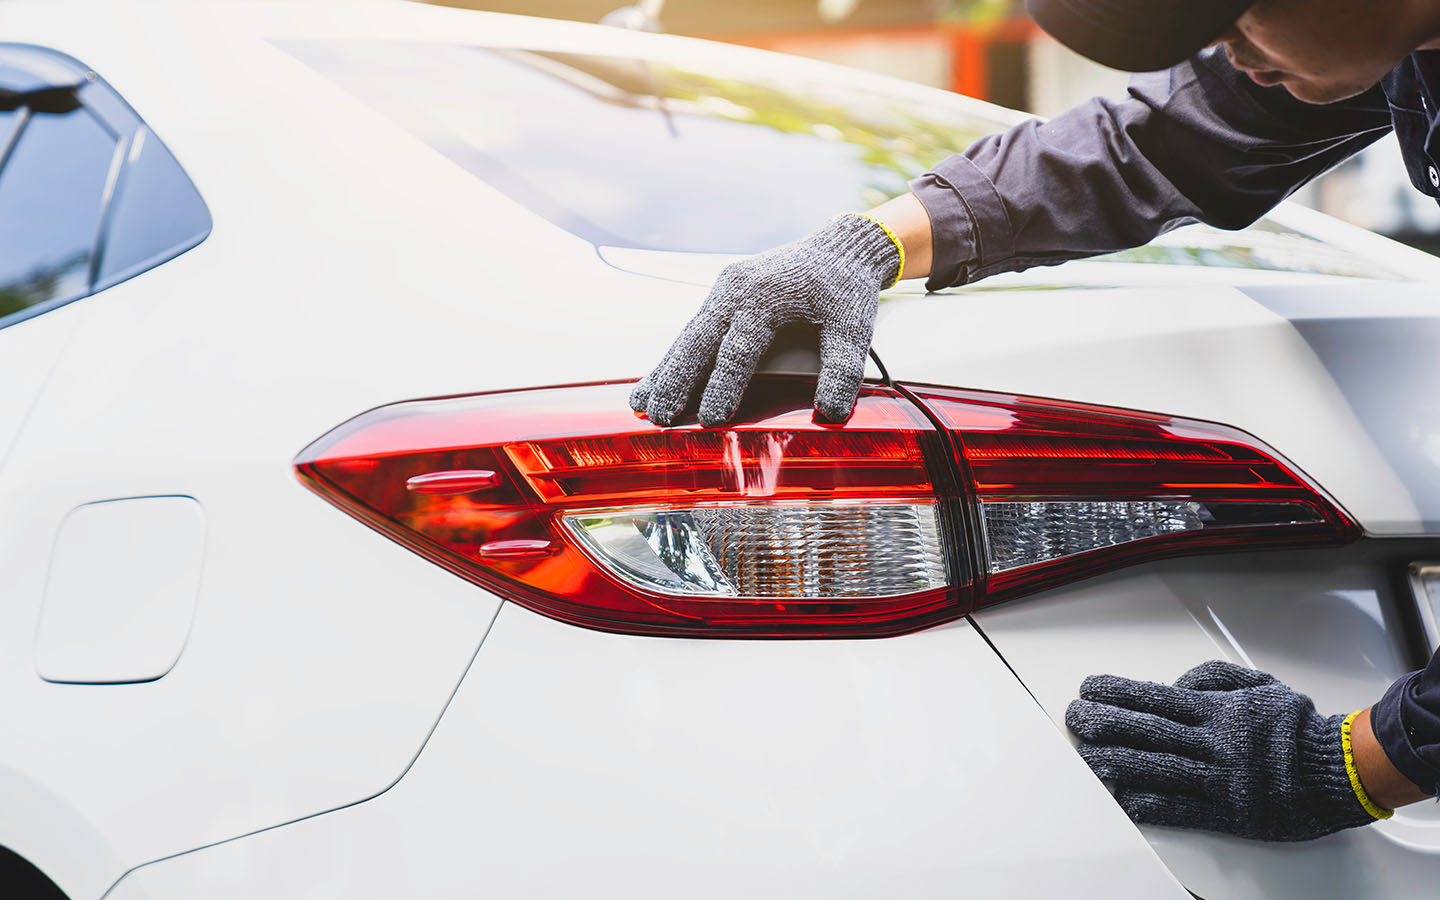 Auto expert inspecting car brake lights